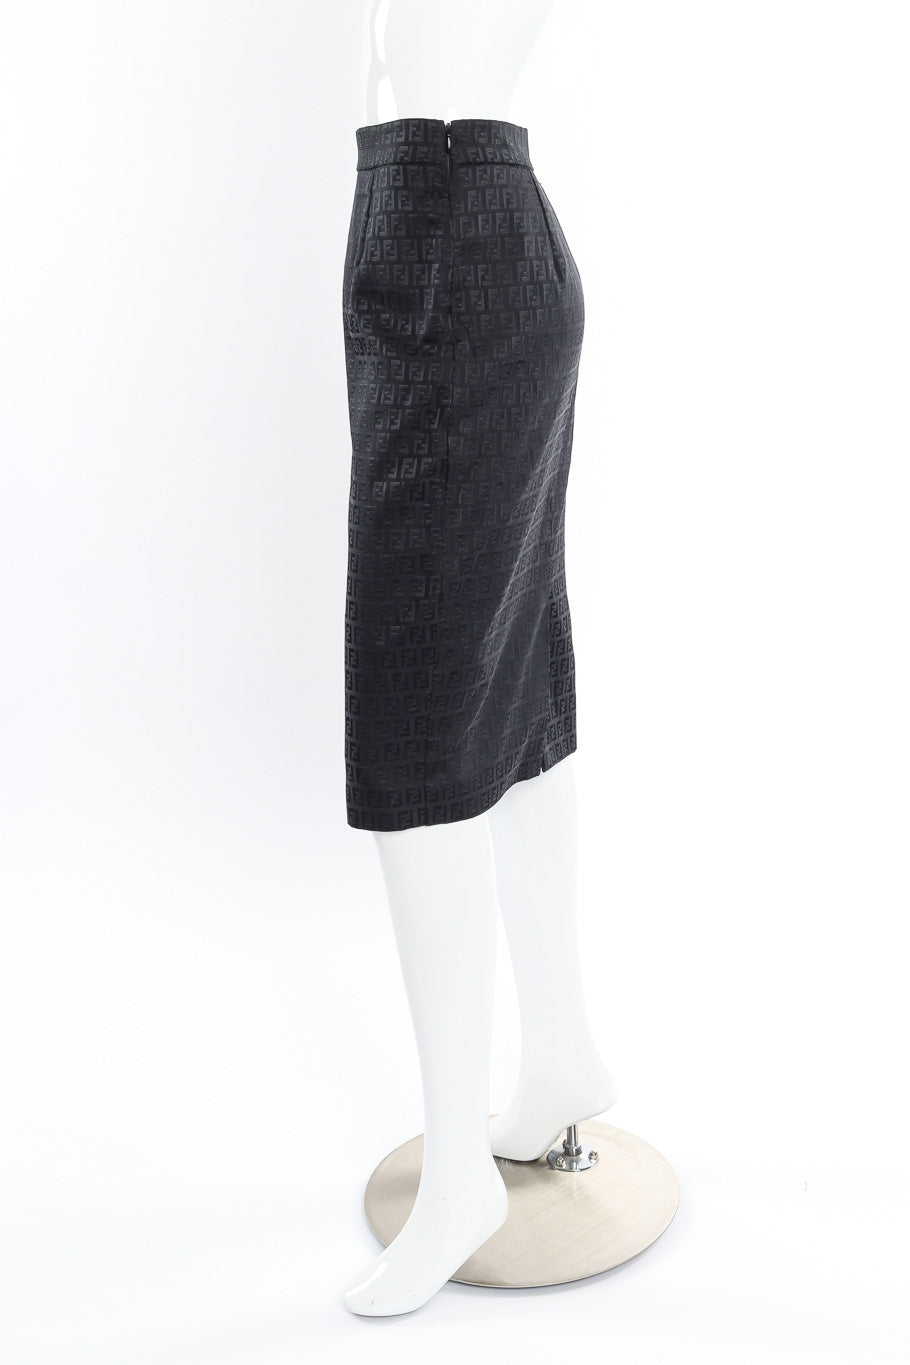 Fendi zucca monogram pencil skirt on mannequin @recessla